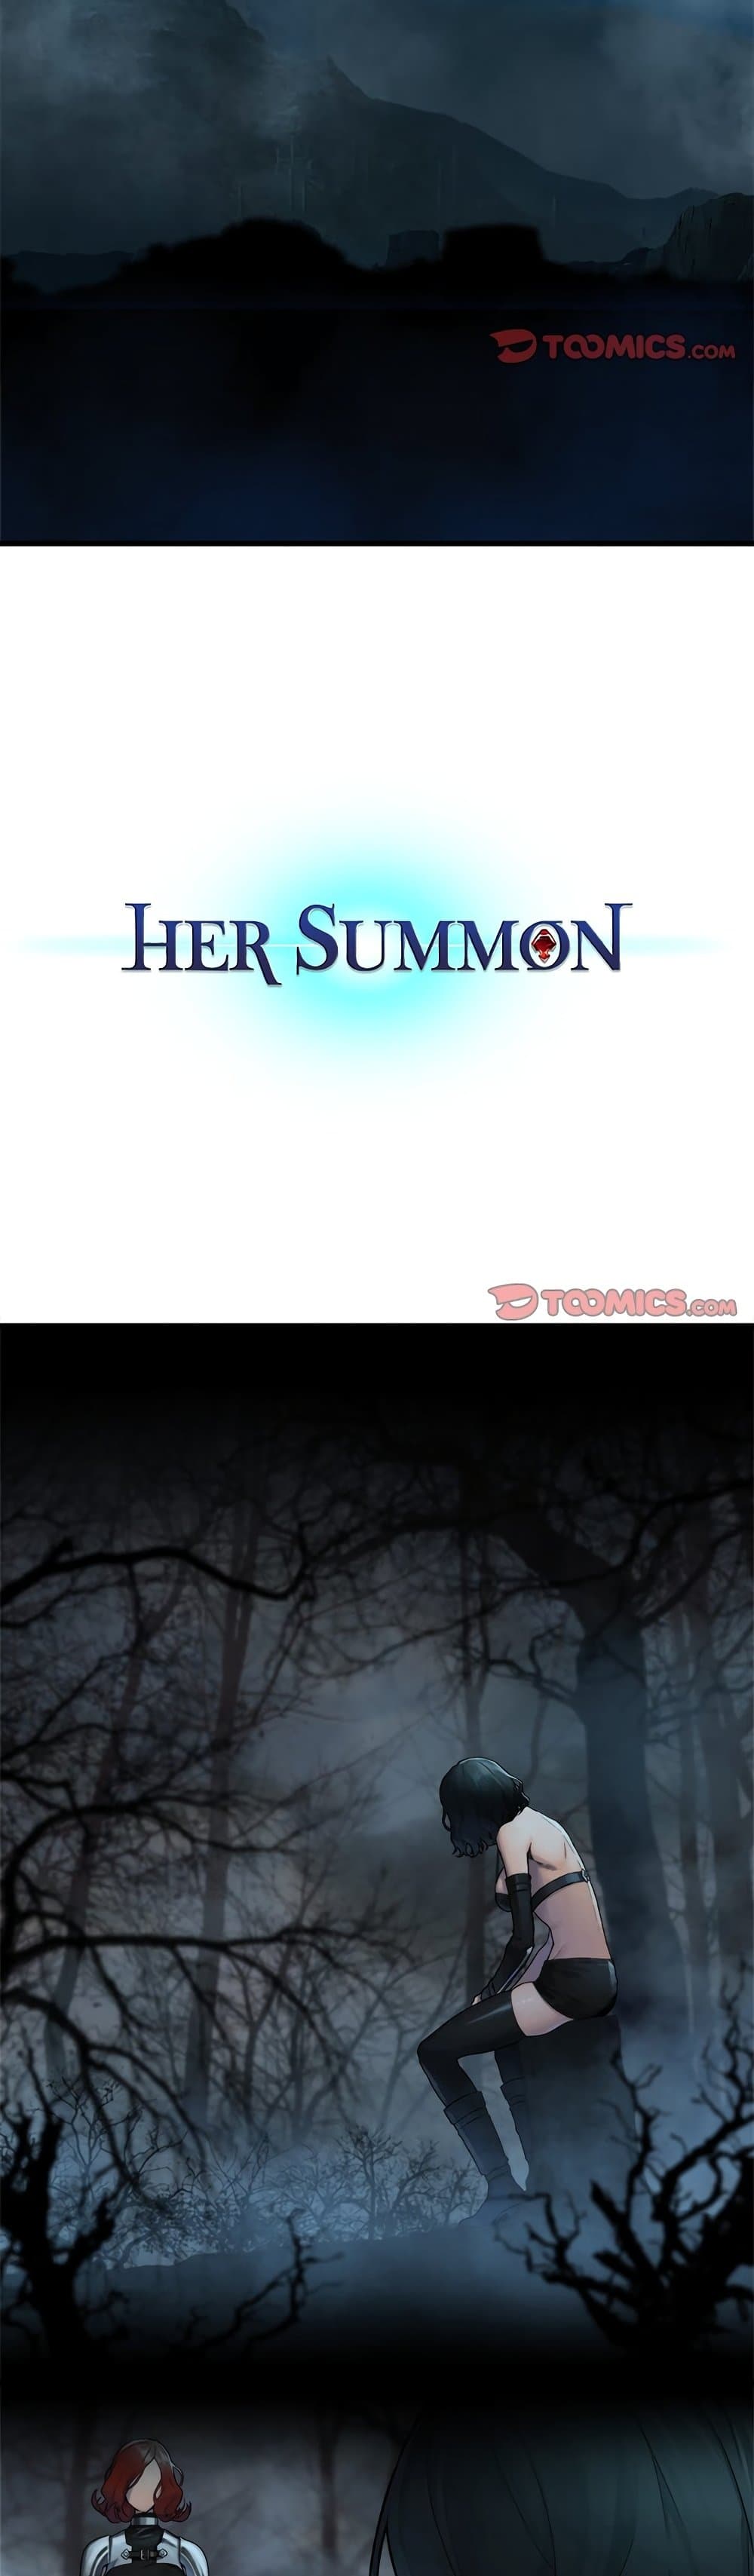 Her Summon 92 (3)